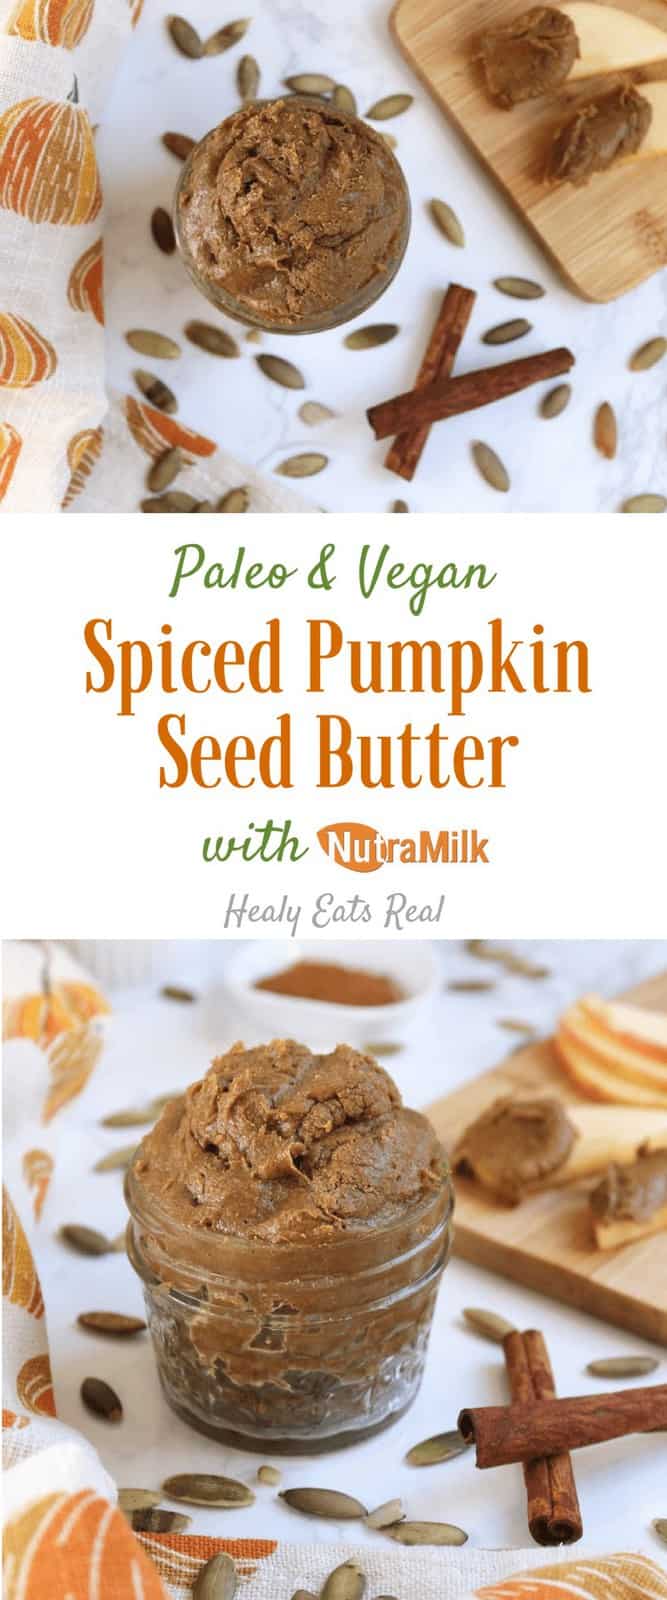 Spiced Pumpkin Seed Butter Recipe (Paleo & Vegan)